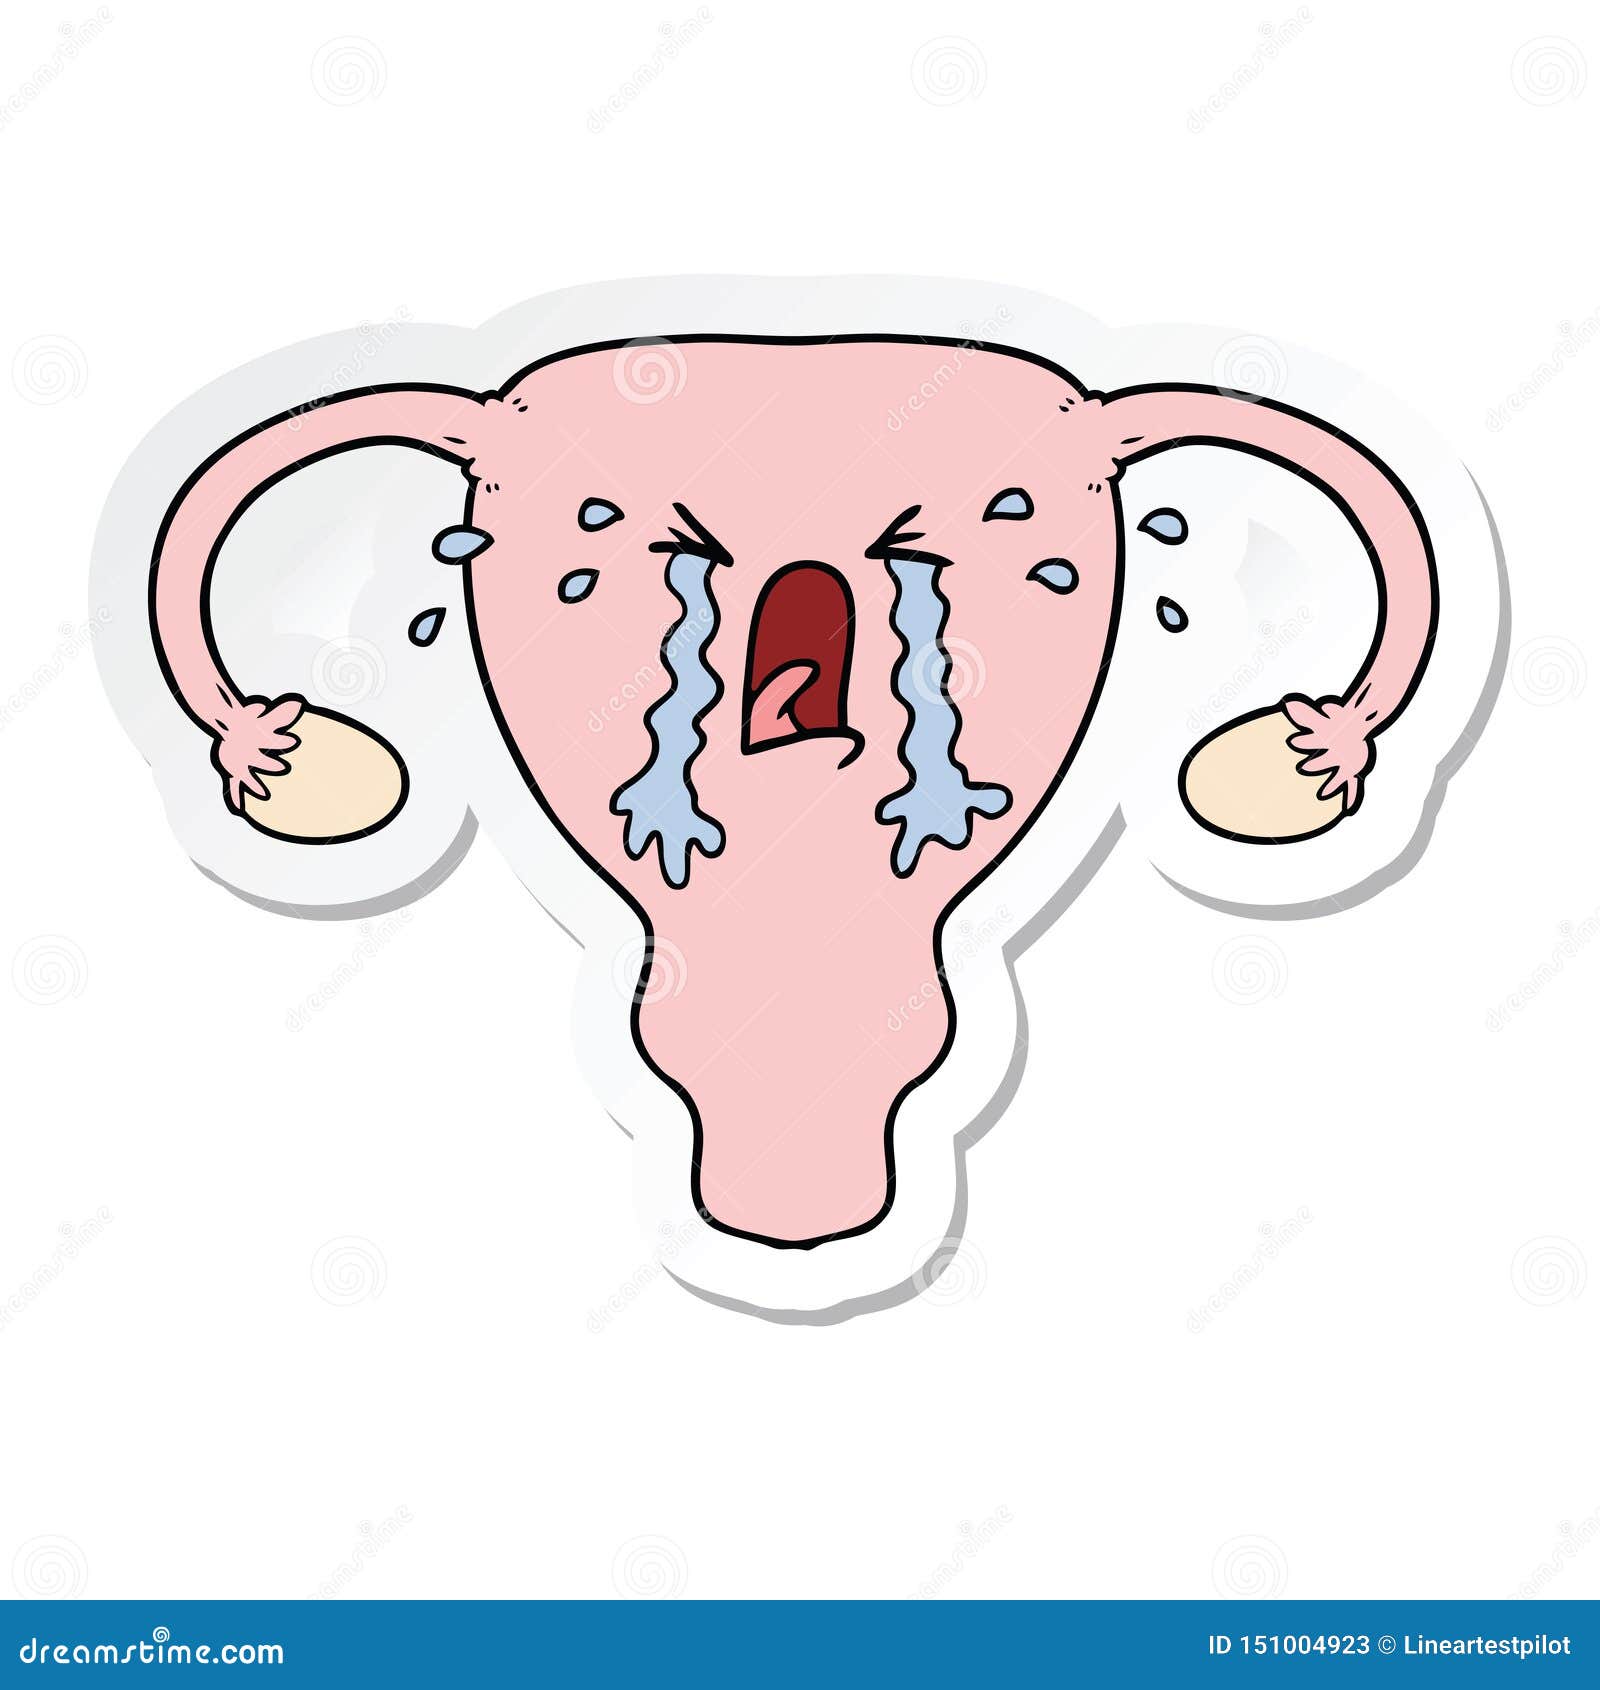 A Creative Sticker of a Cartoon Uterus Crying Stock Vector ...